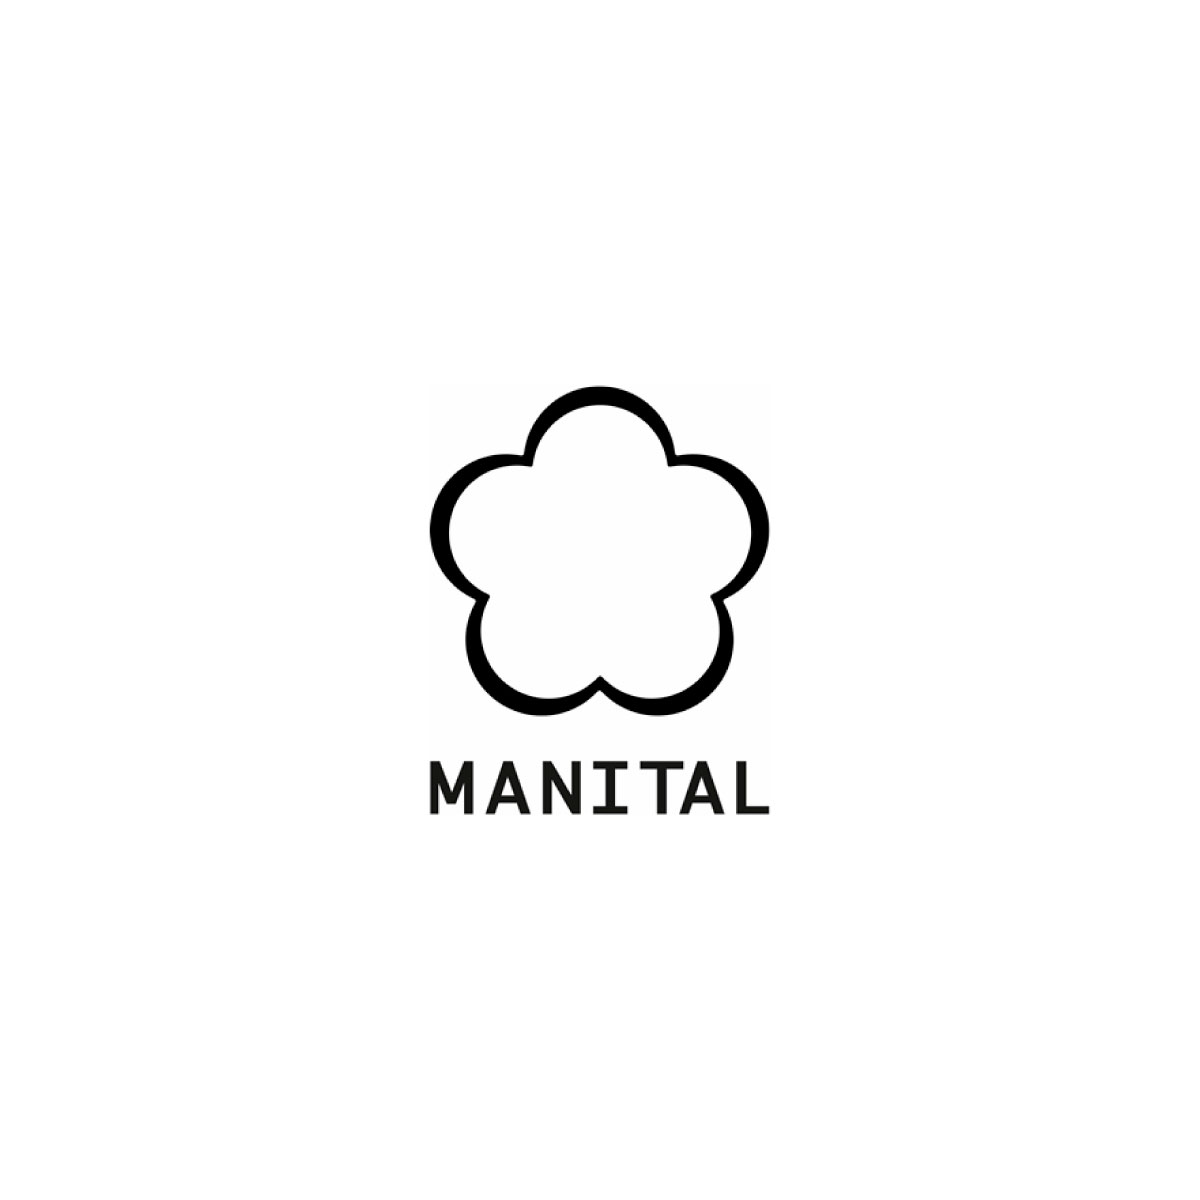 Manital